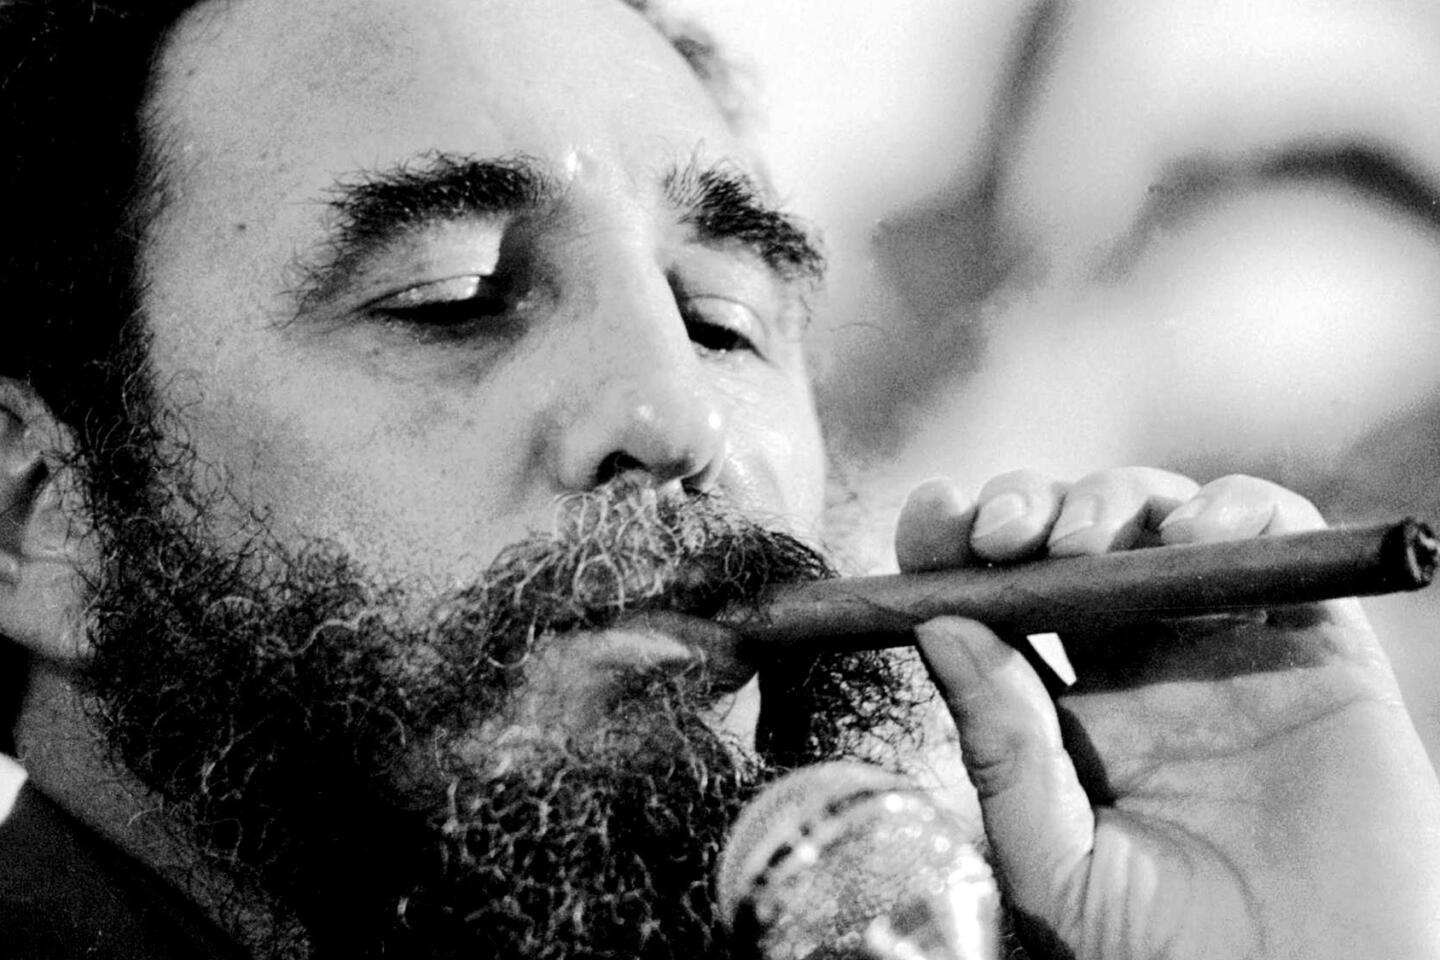 Fidel Castro dead at 90: The revolutionary icon's influence was